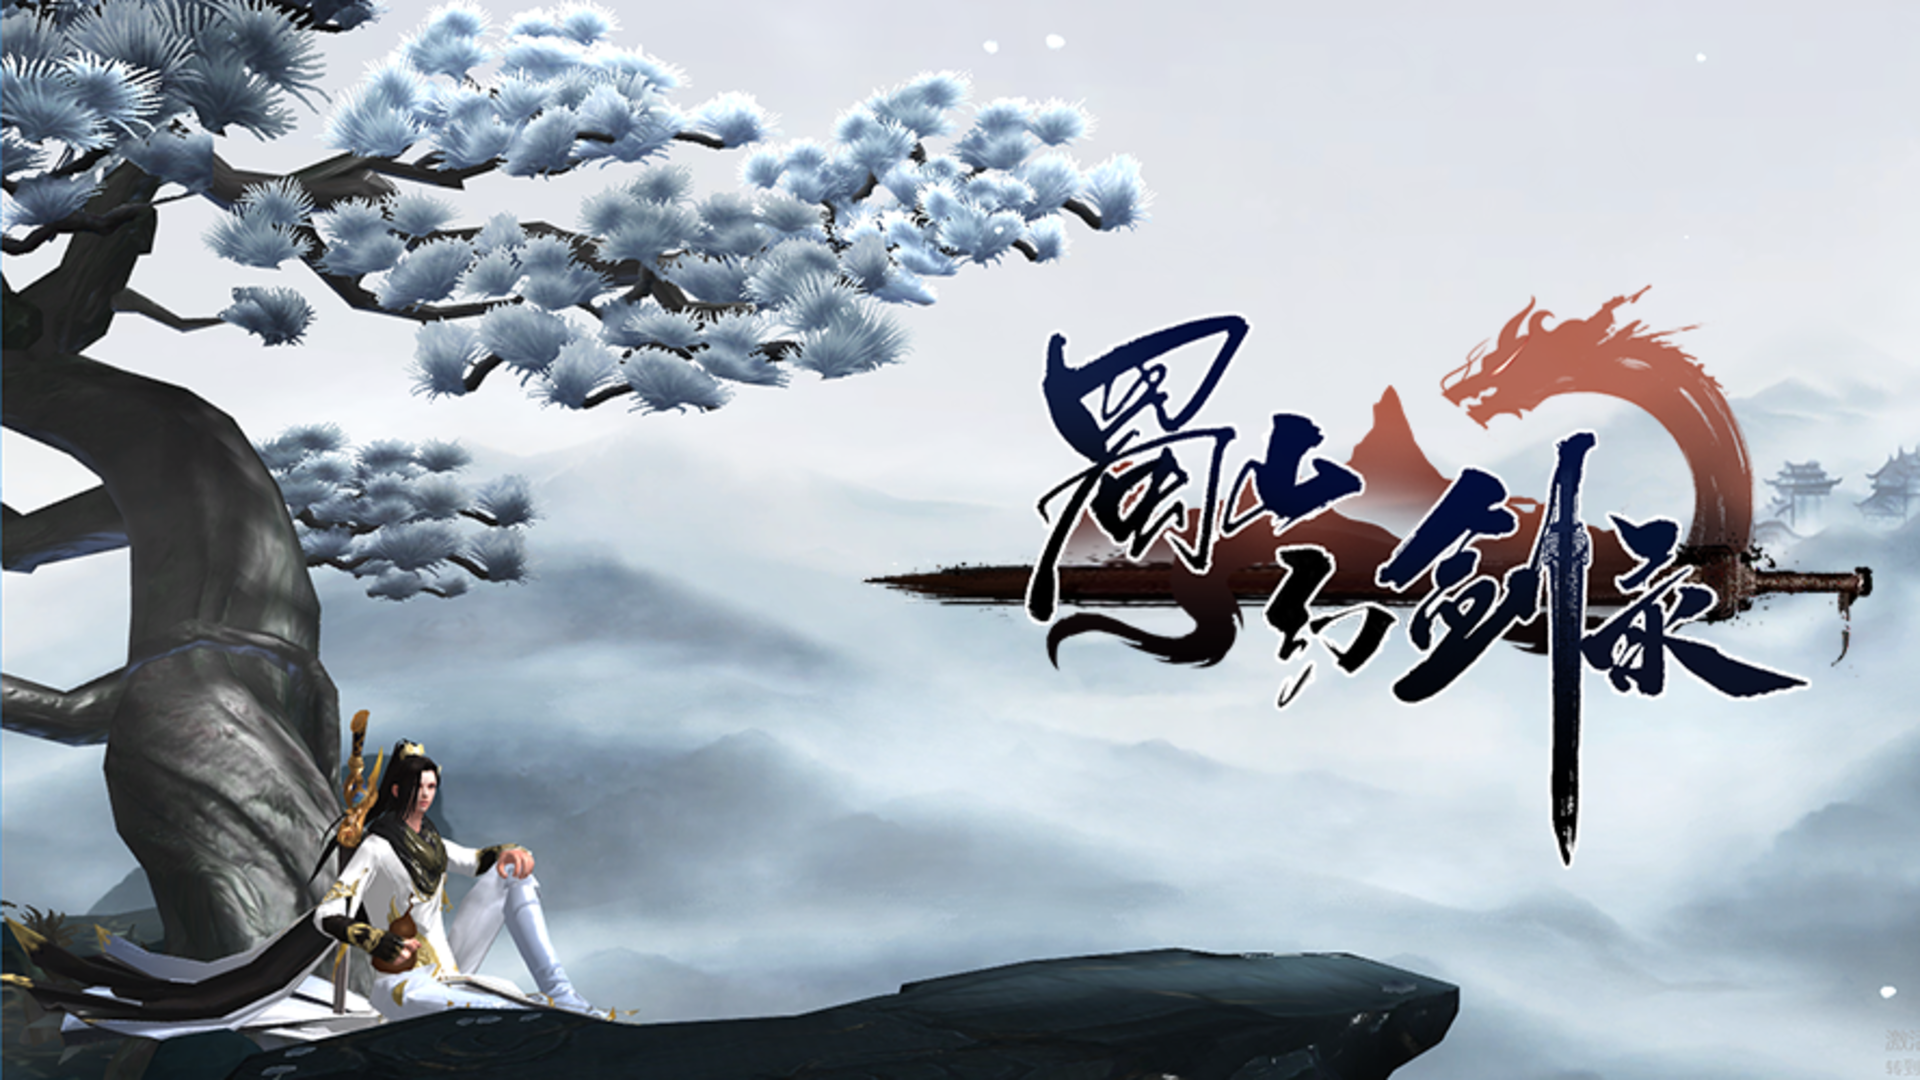 Banner of Registro de Espada Fantasia Shushan 